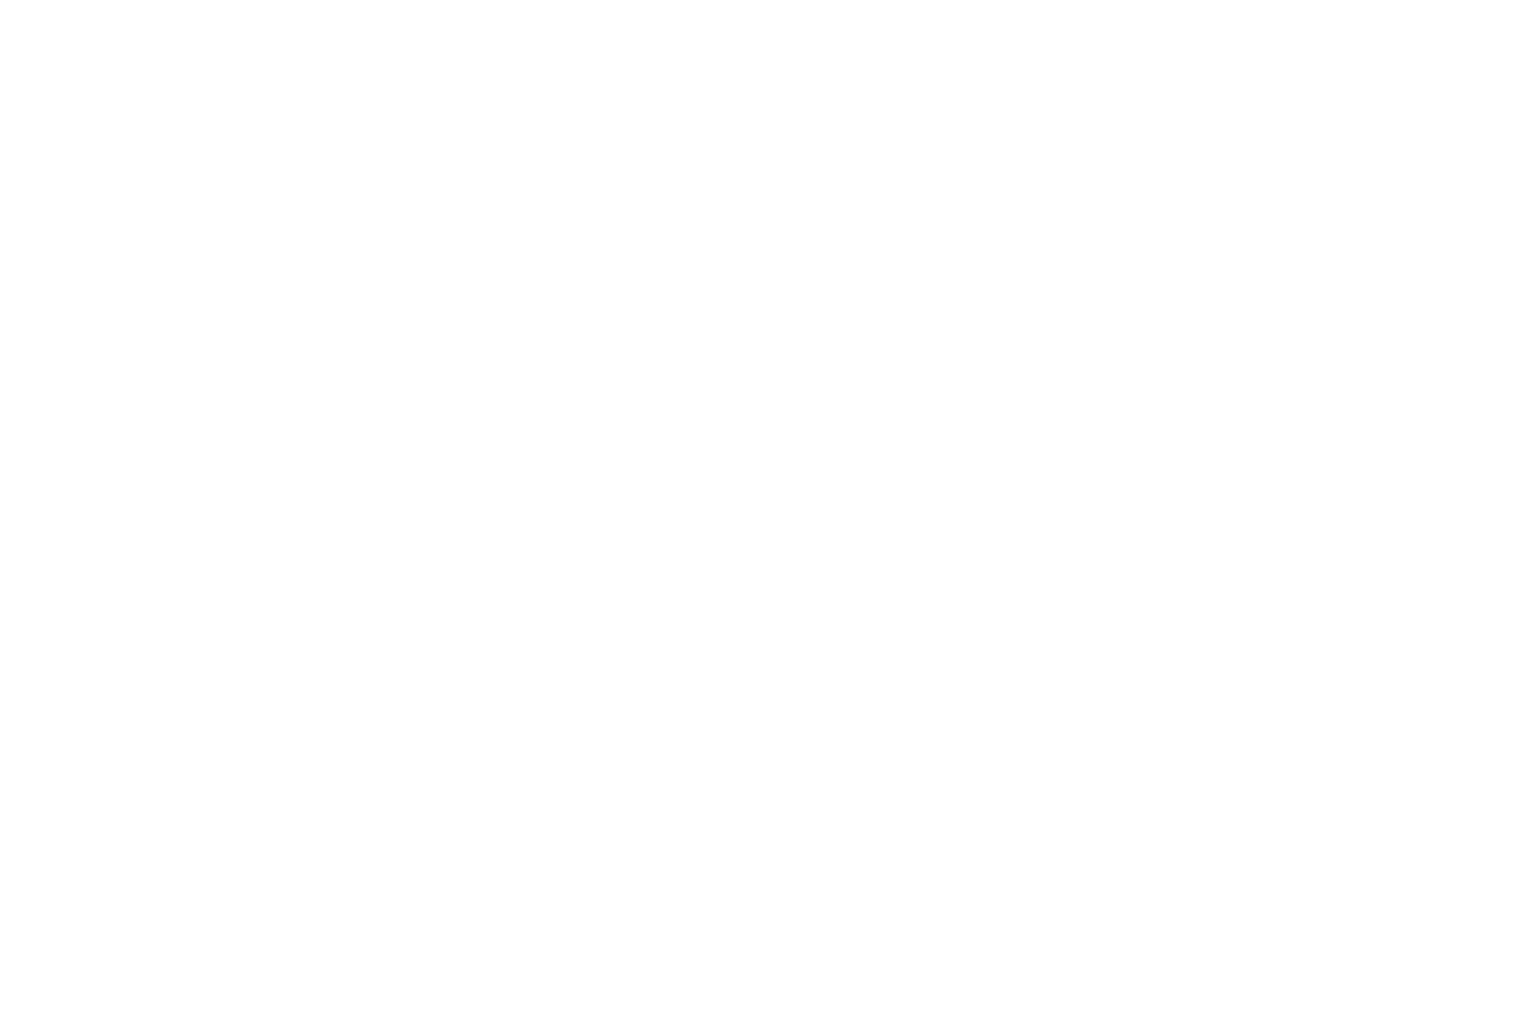 Grindrod Shipping logo for dark backgrounds (transparent PNG)